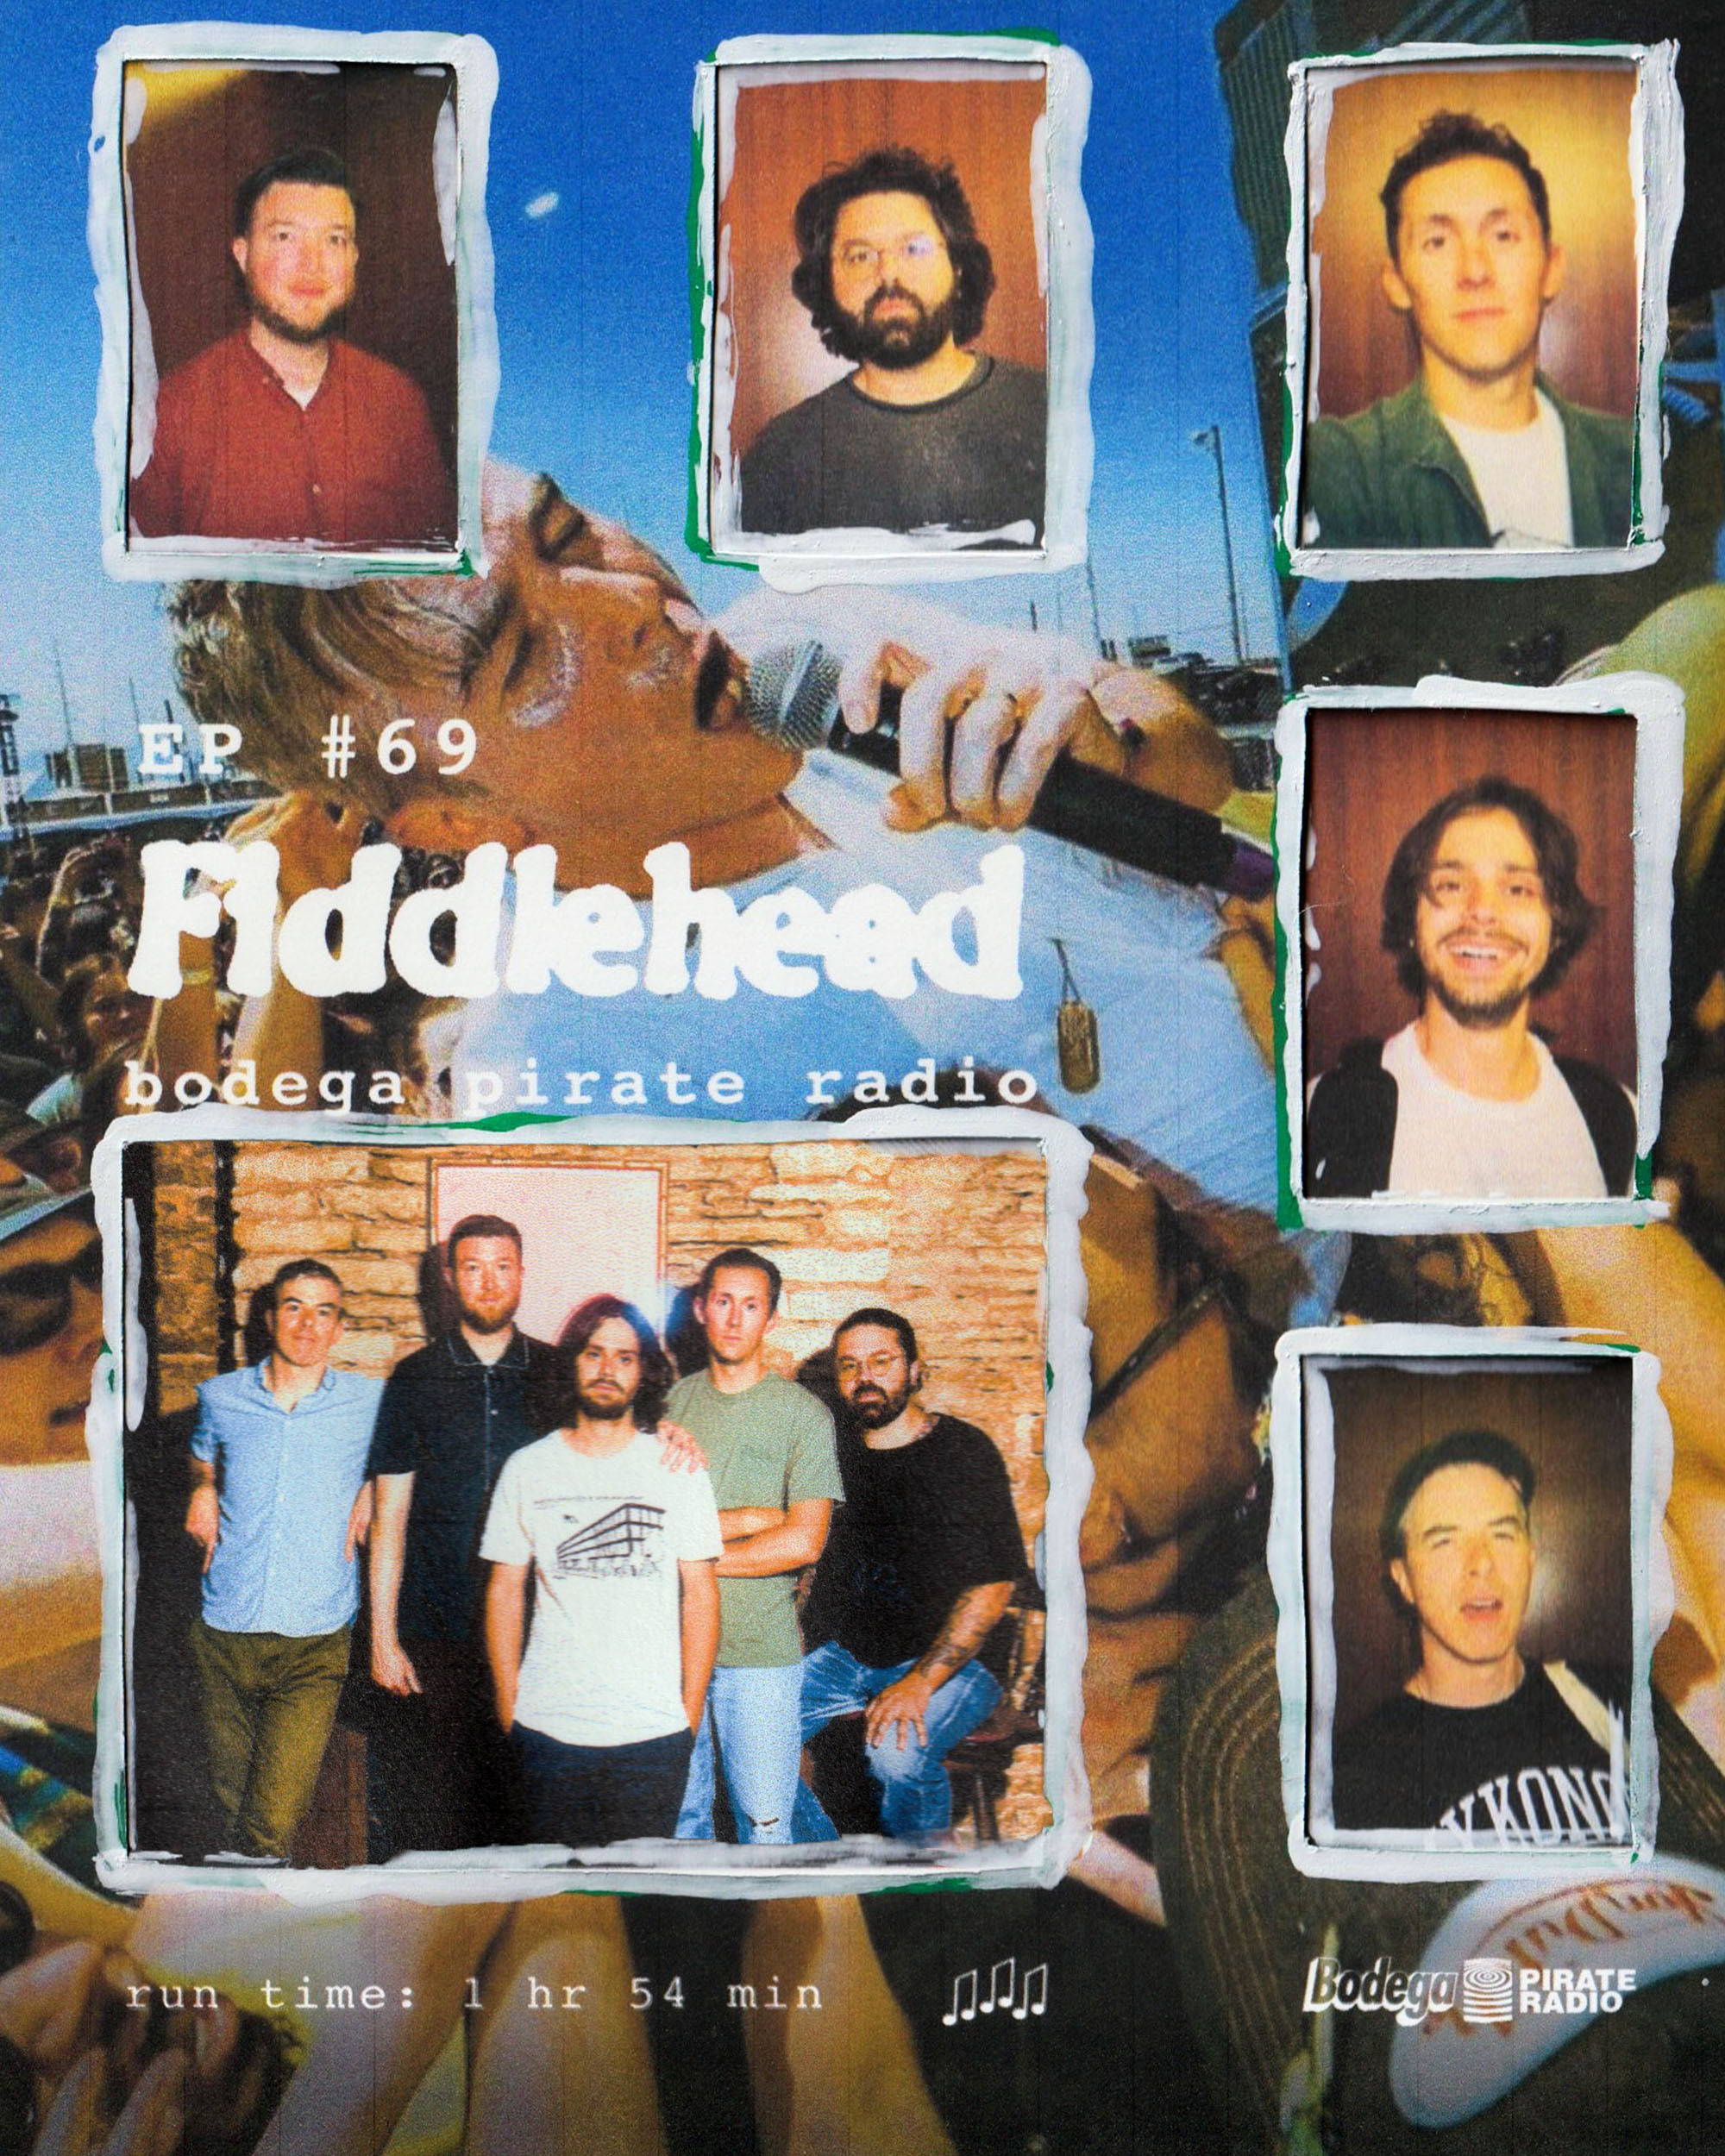 Bodega Pirate Radio EP #69 - Fiddlehead